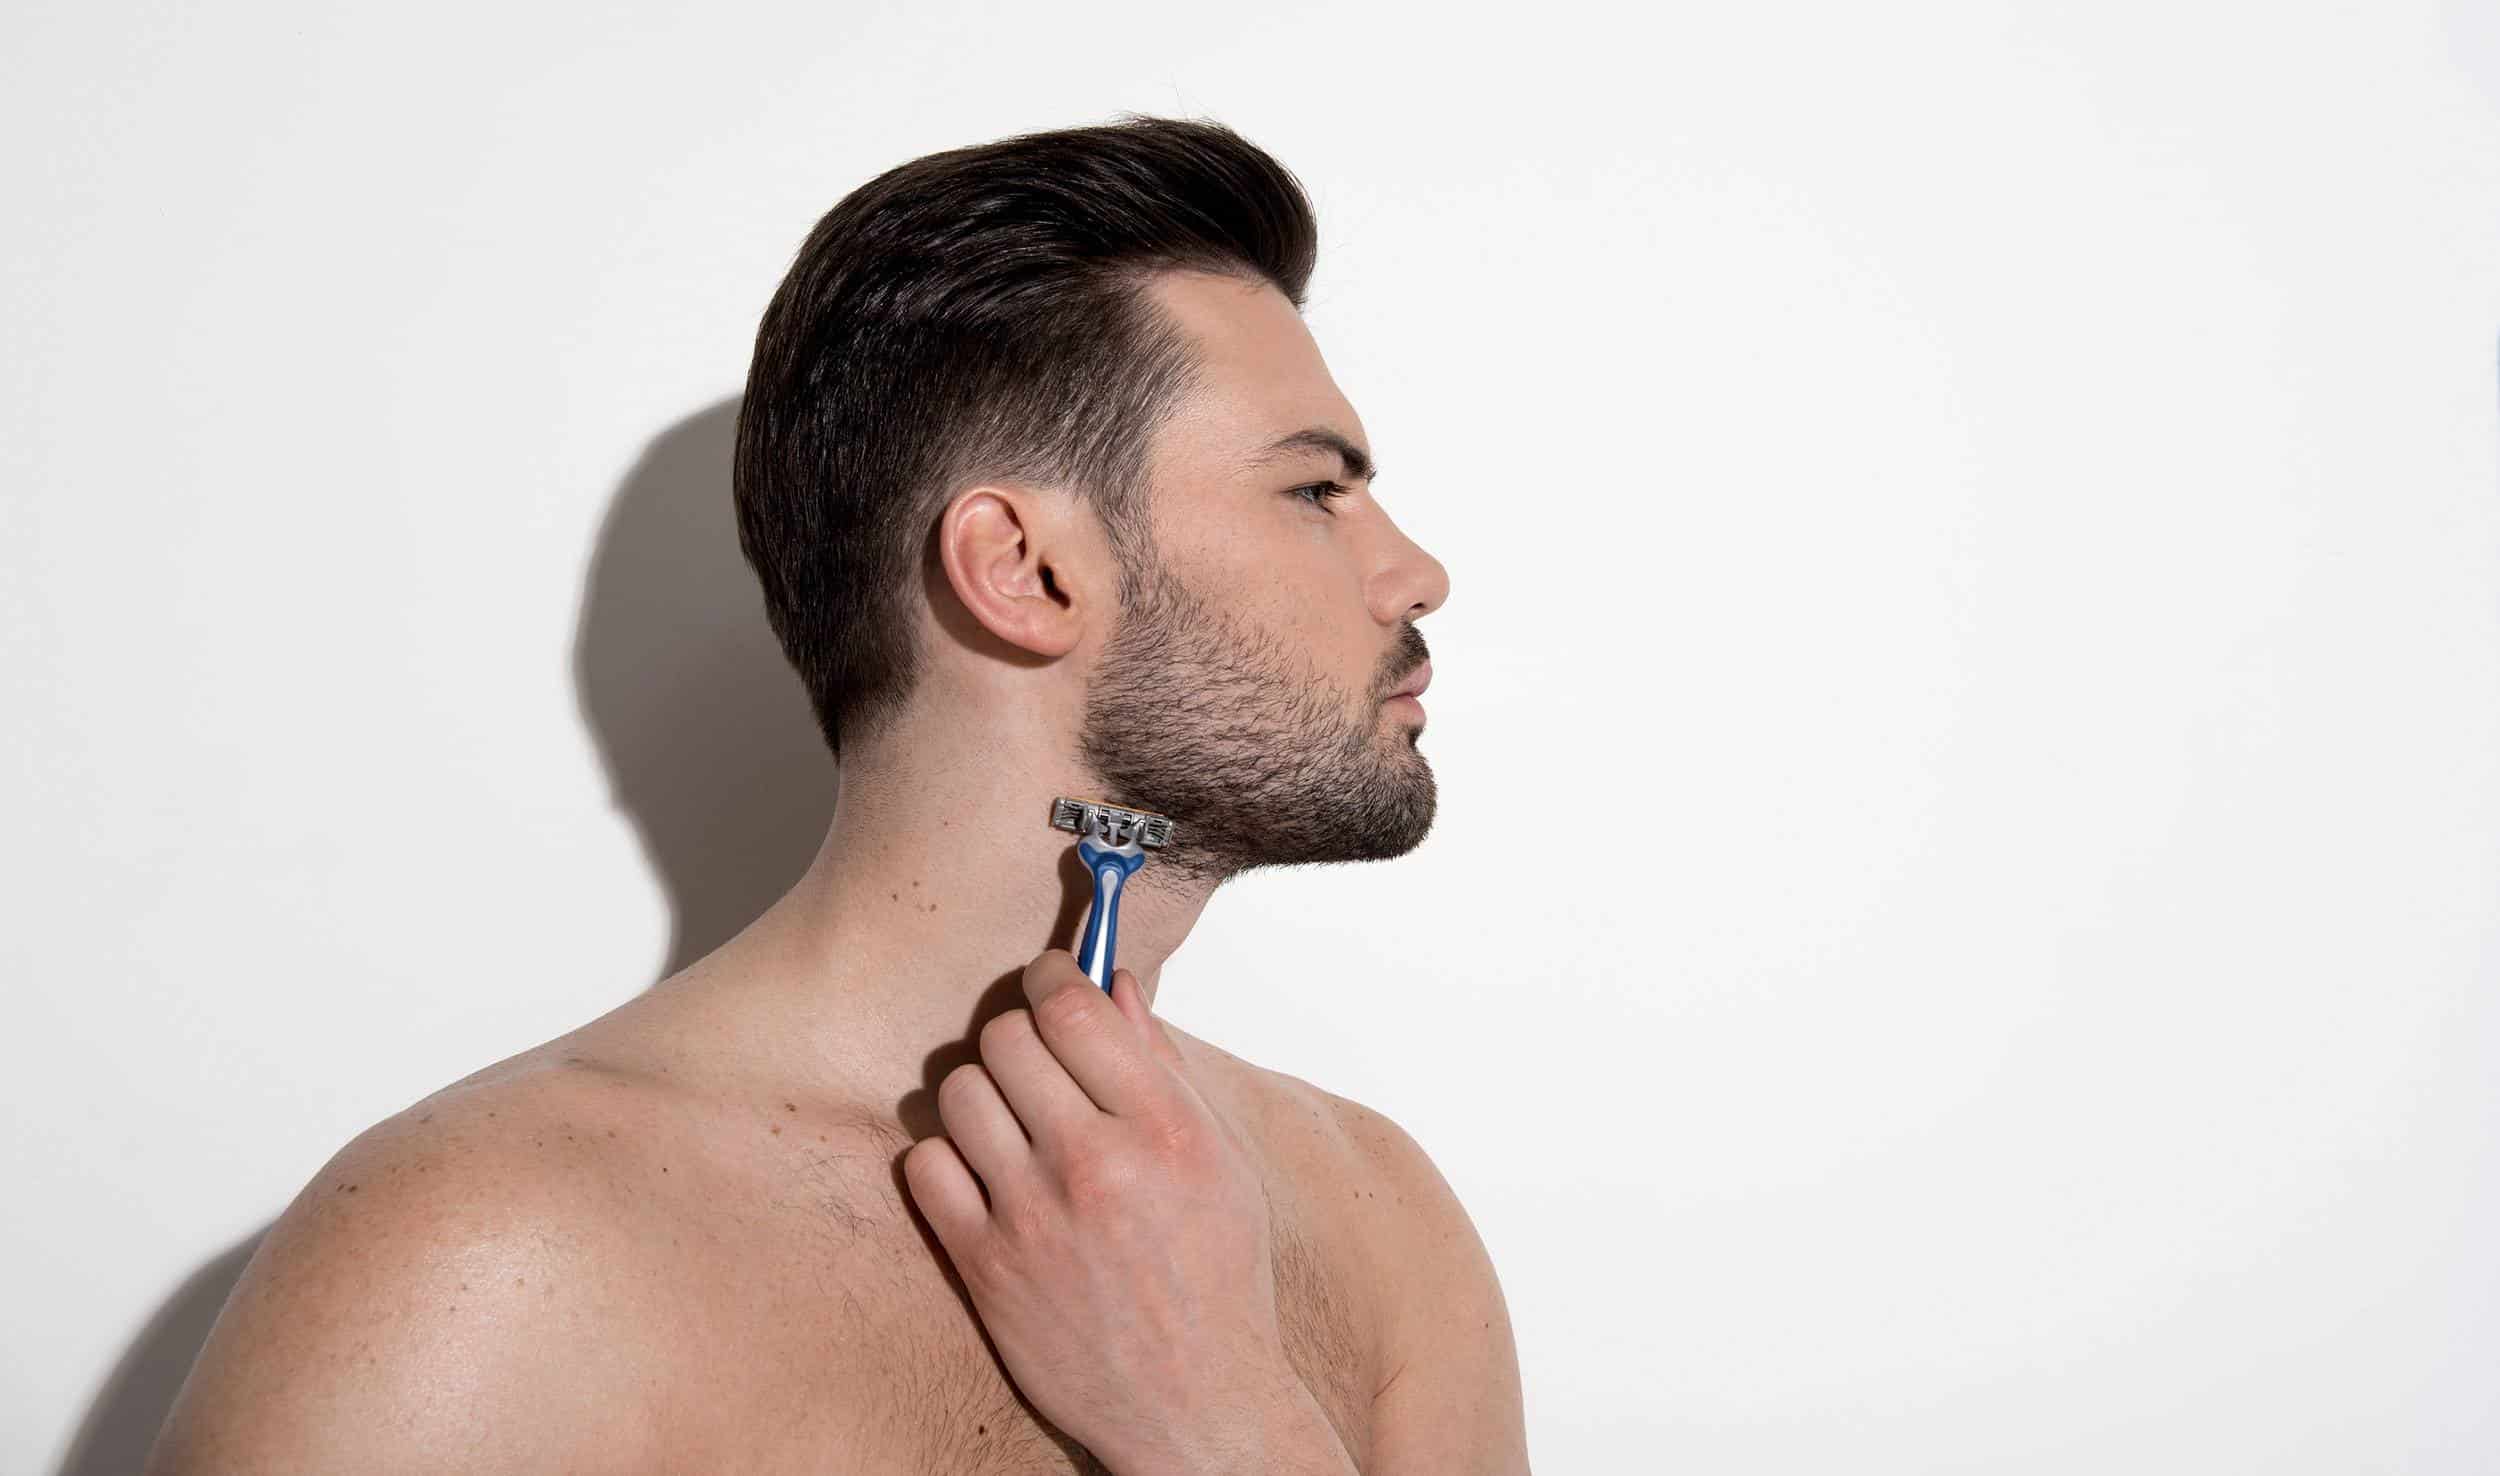 razor for shaping beard